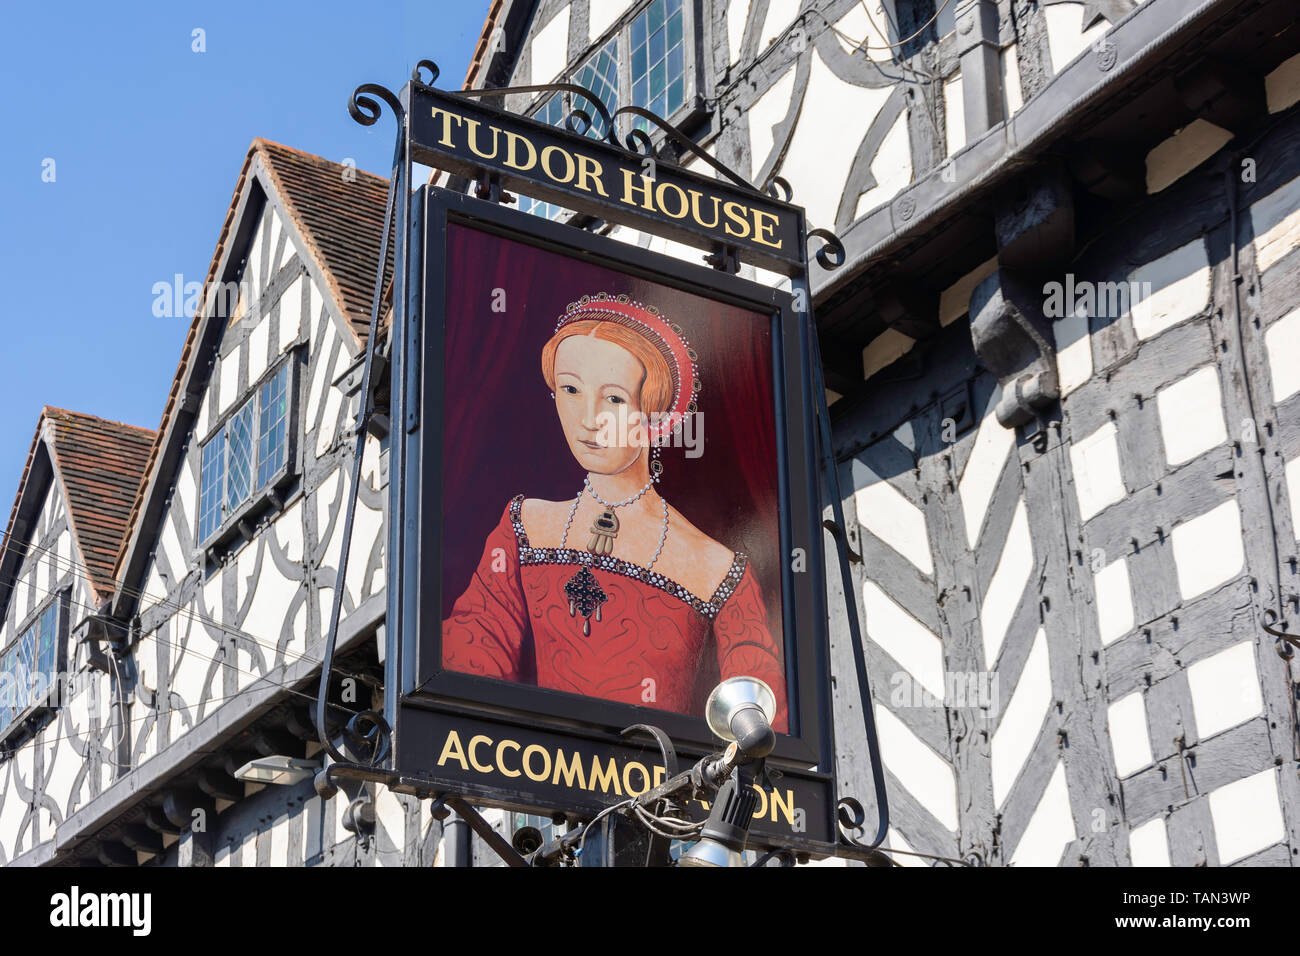 15th century Tudor House Inn sign, West Street, Warwick, Warwickshire, England, United Kingdom Stock Photo